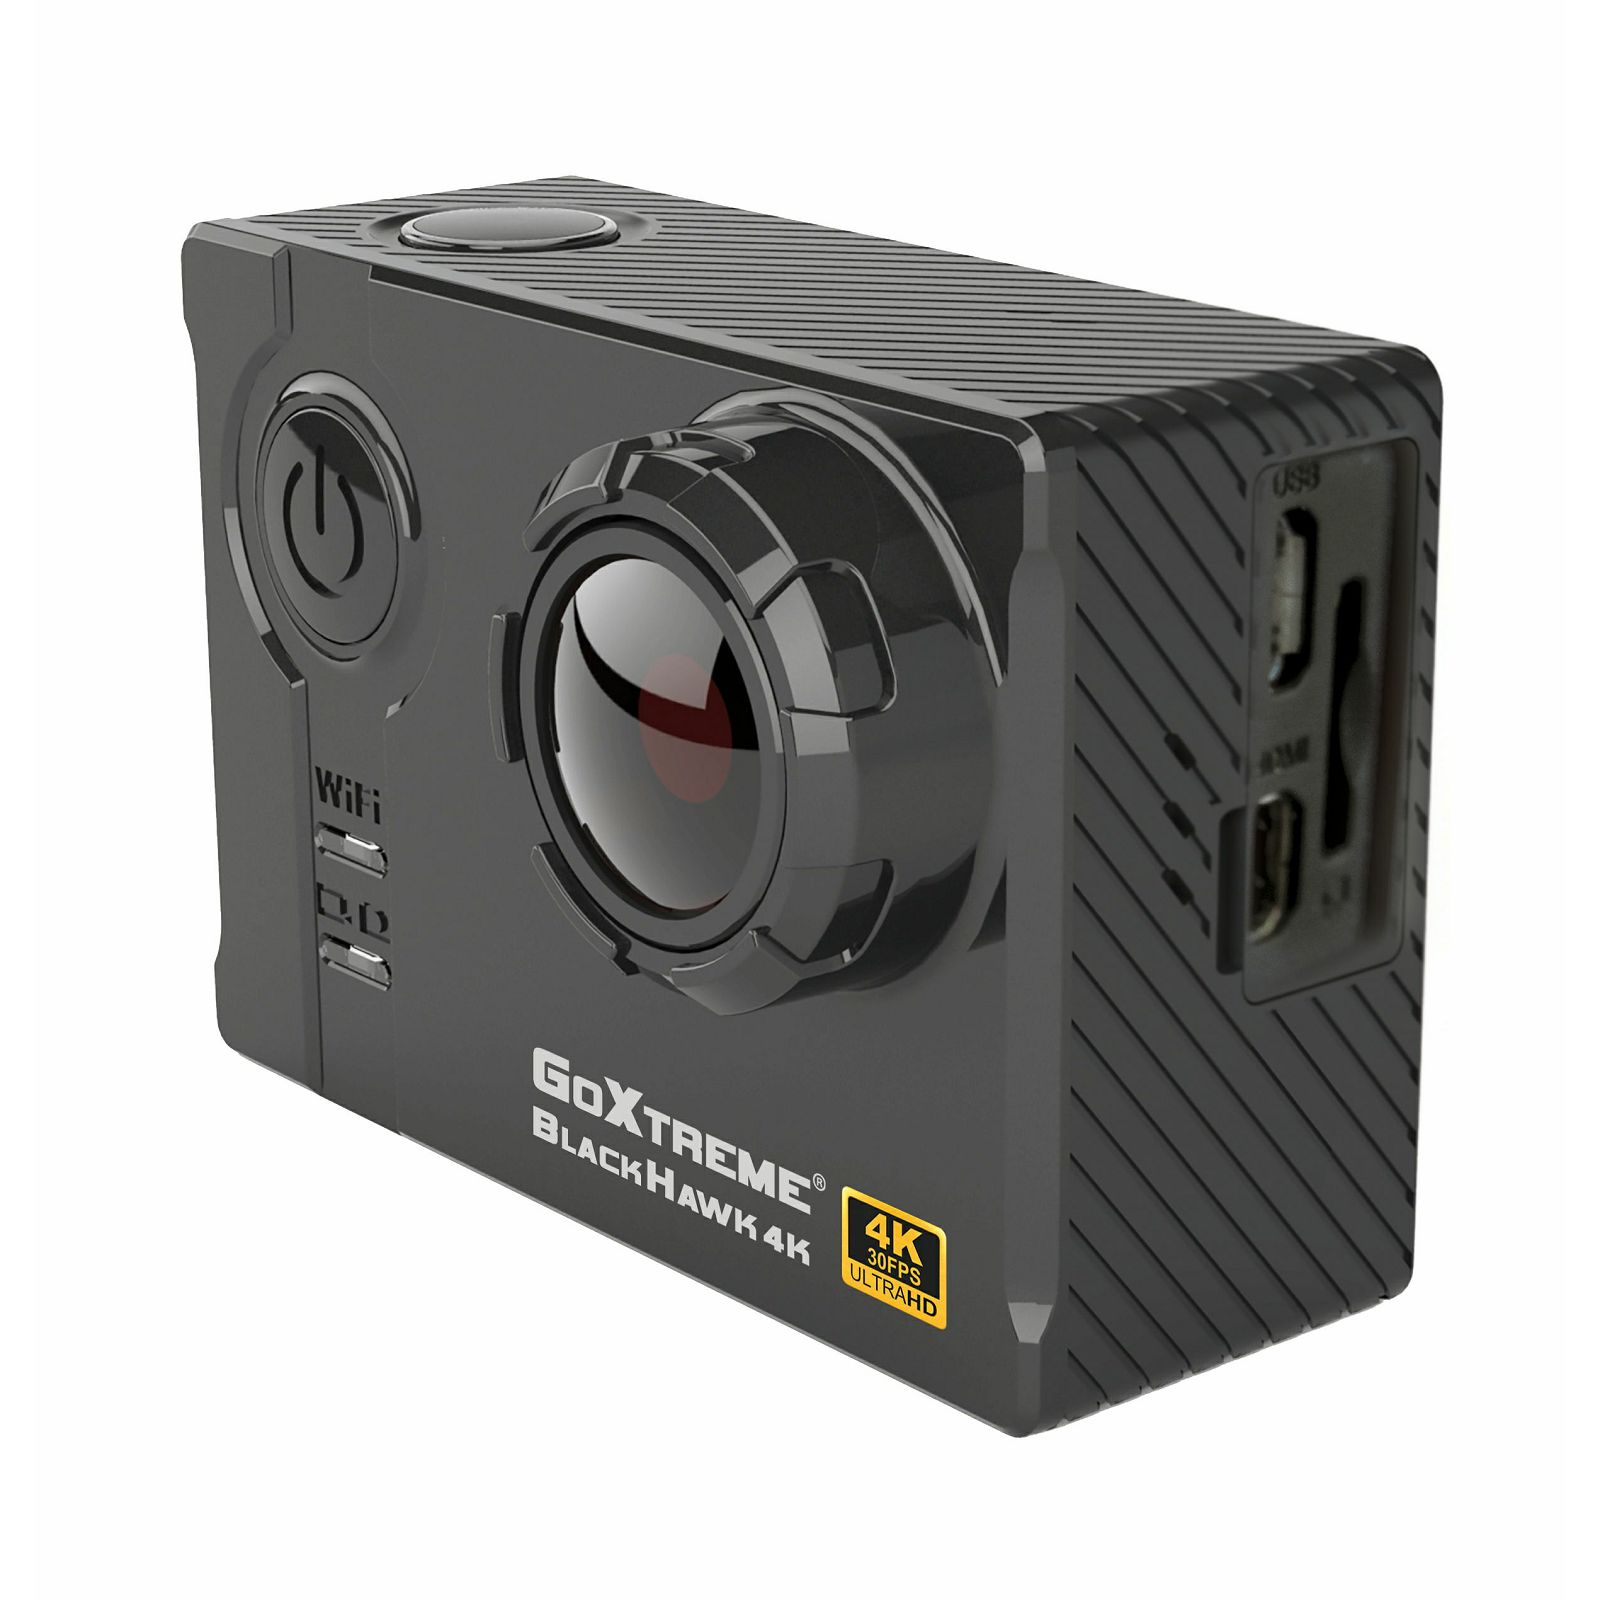 GoXtreme BlackHawk 4K Ultra HD Action Camera 4K 30fps 12.4MP WiFi Waterproof sportska akcijska kamera vodootporna do 60m (20132)